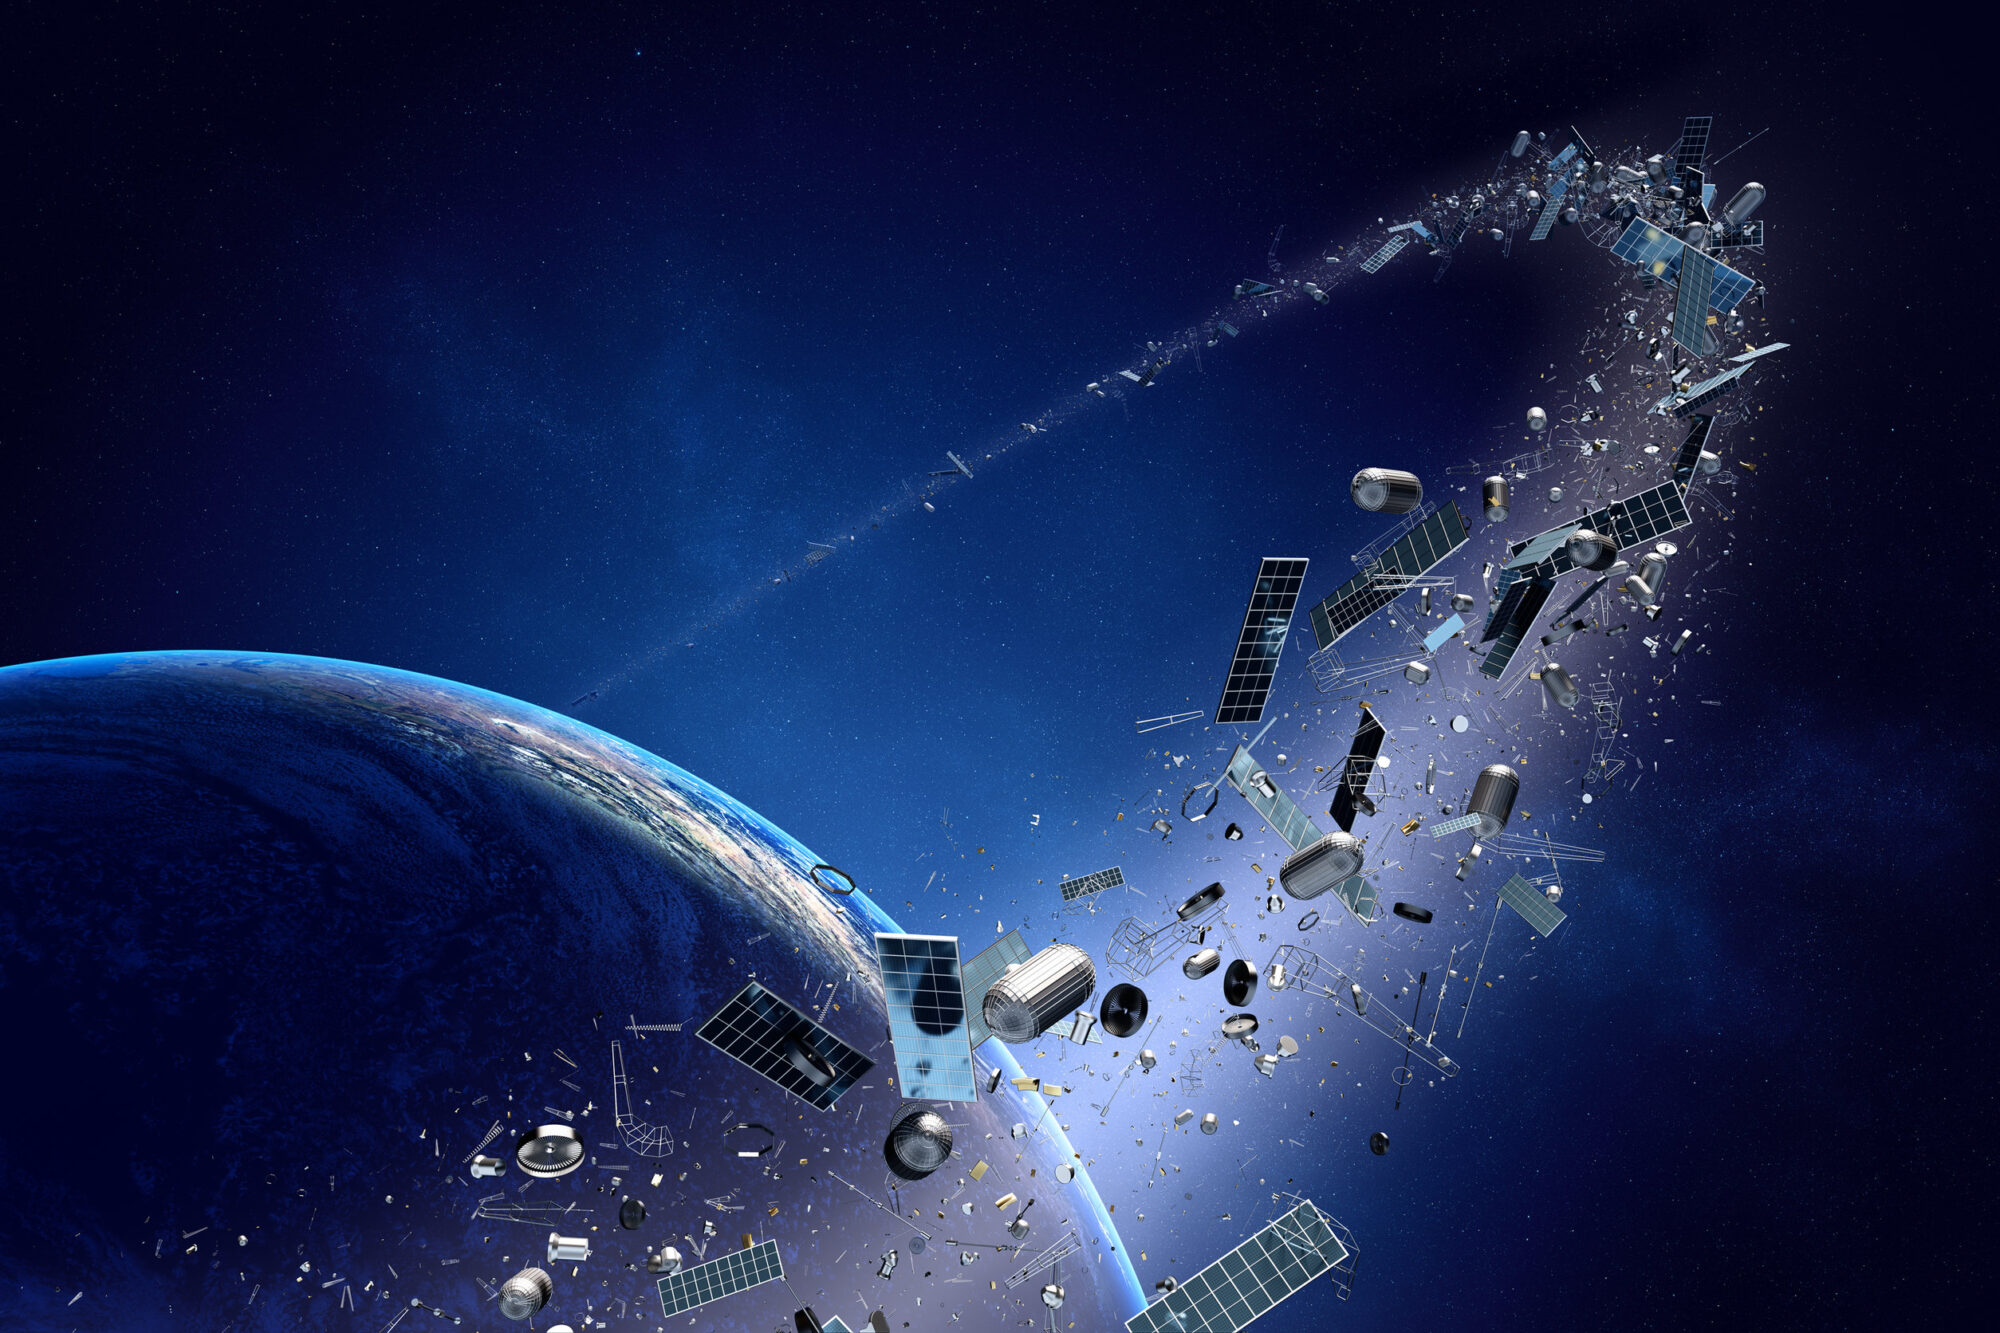 space debris header image